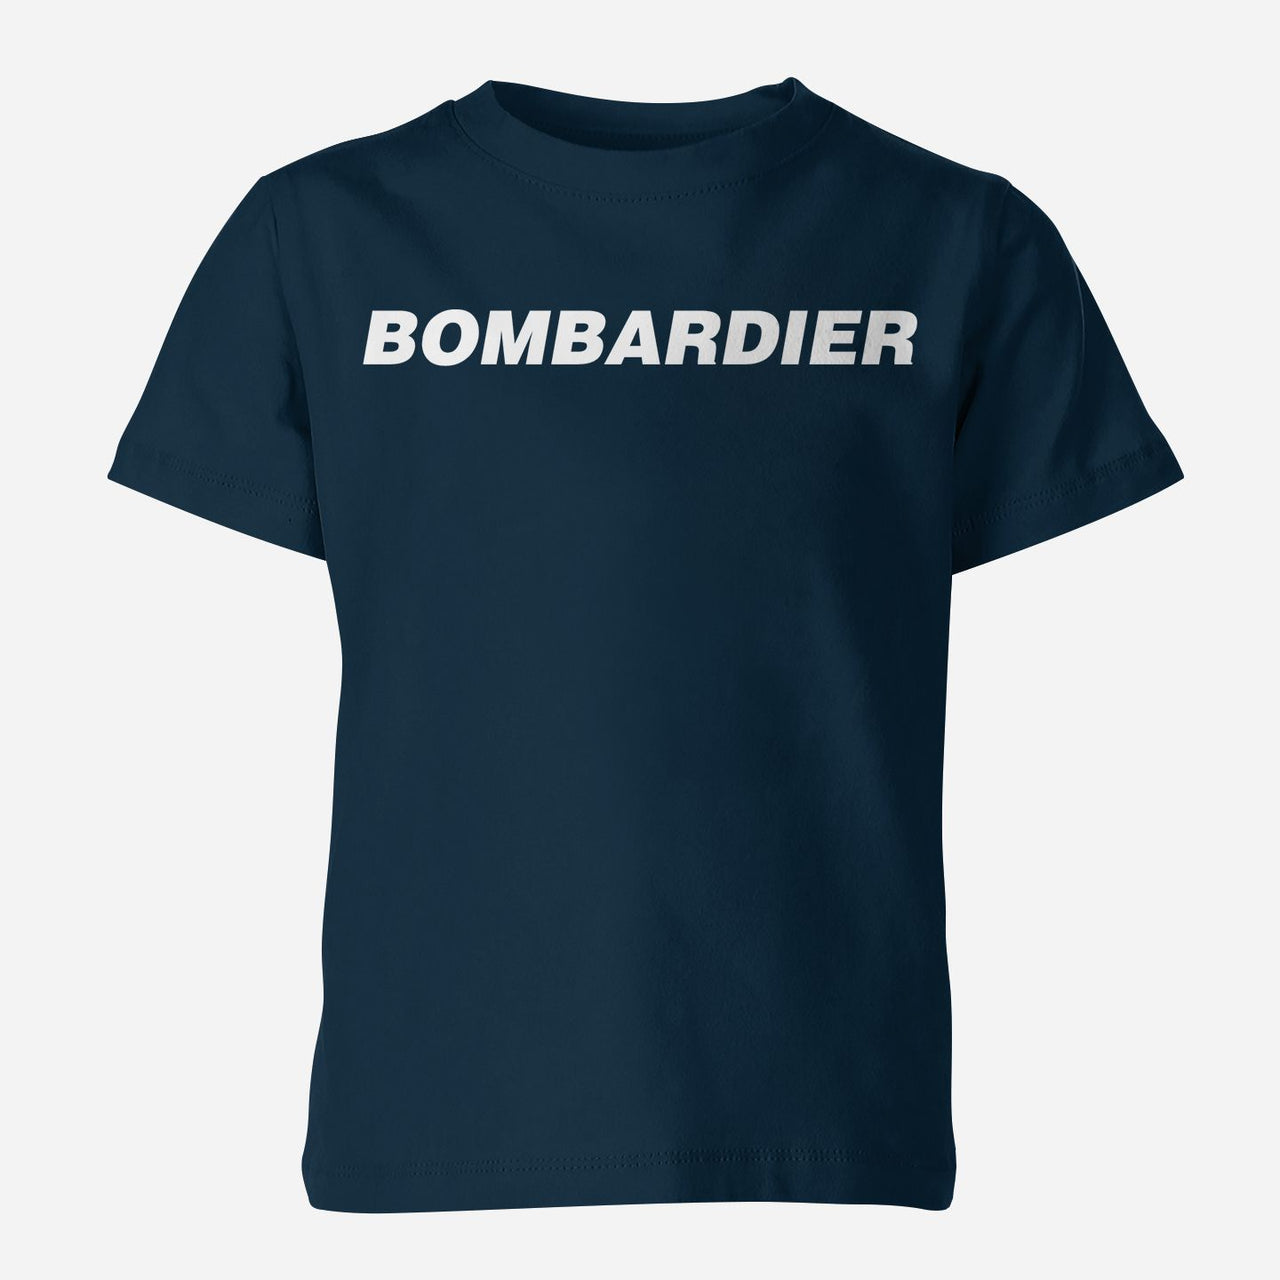 Bombardier & Text Designed Children T-Shirts